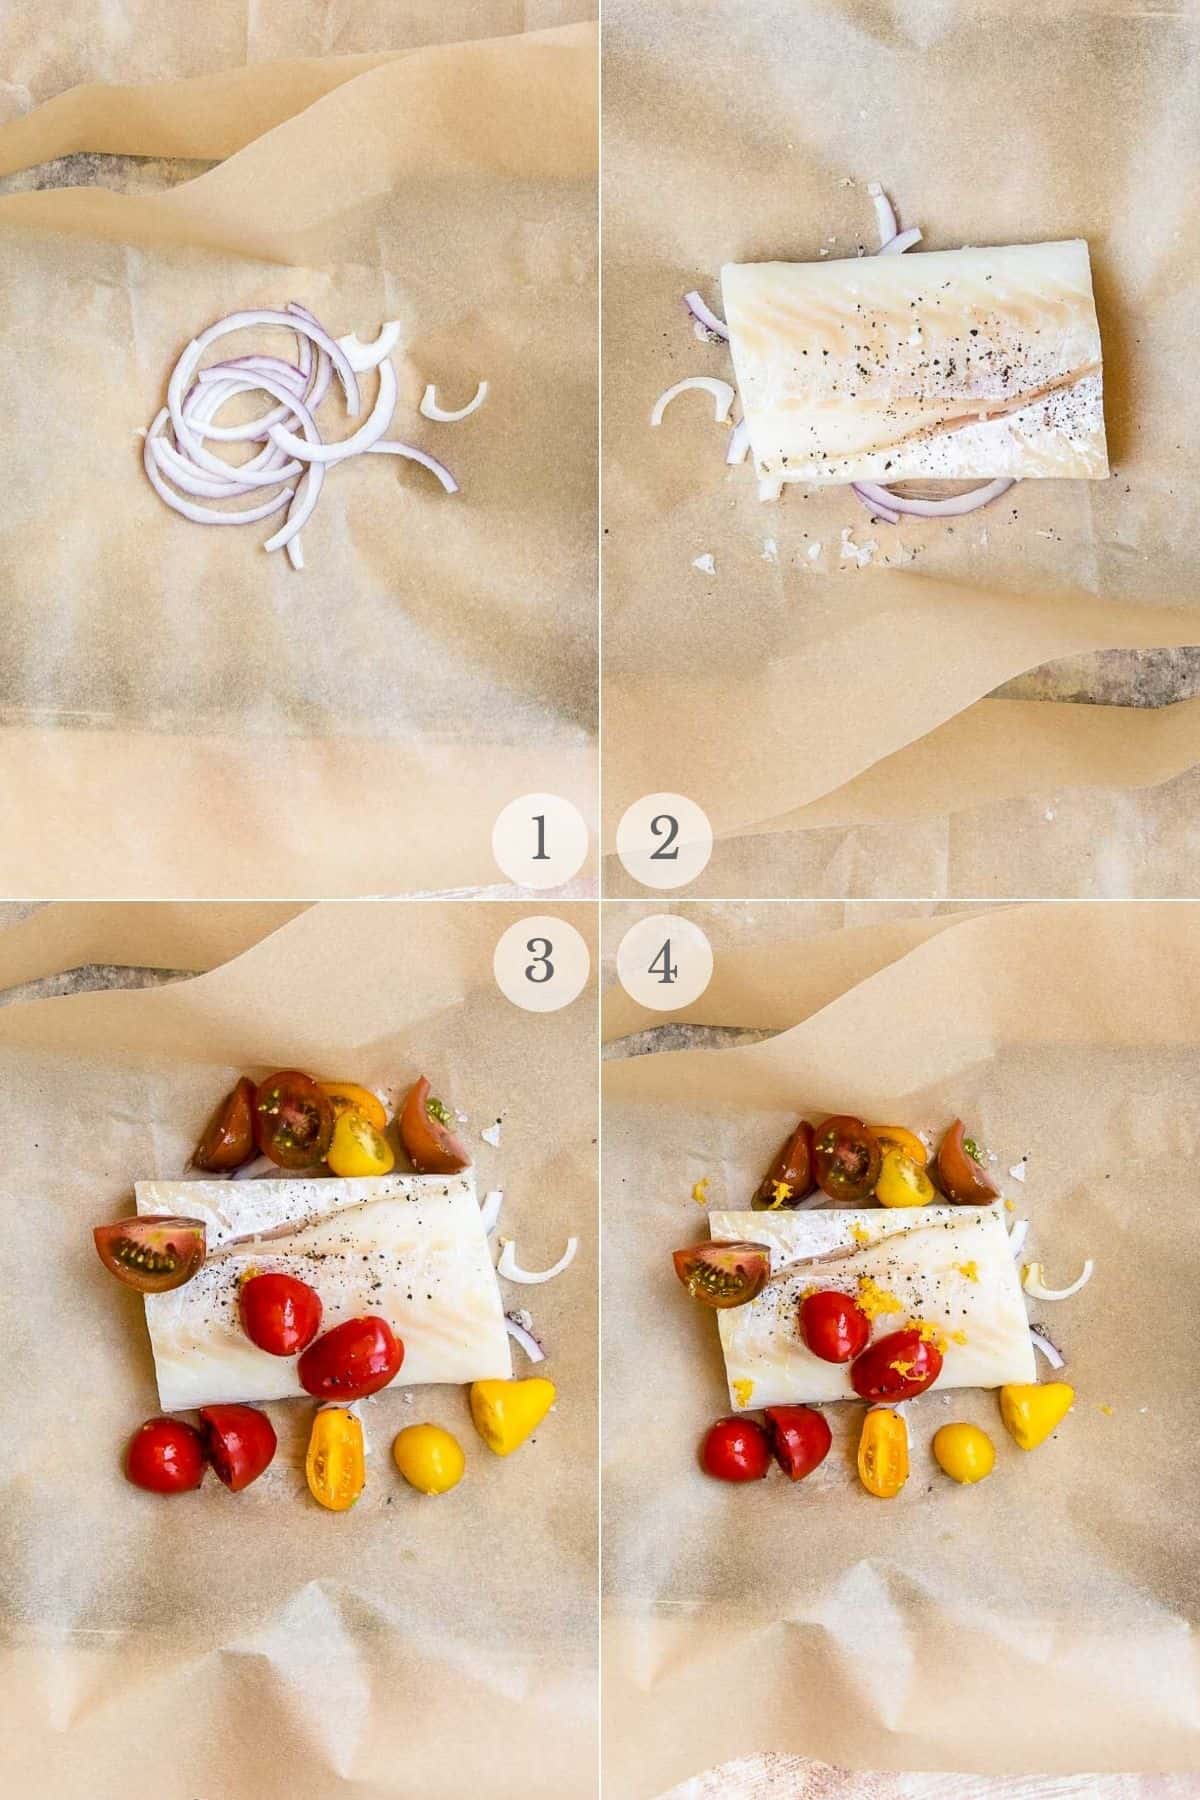 baked cod recipe steps 1-4